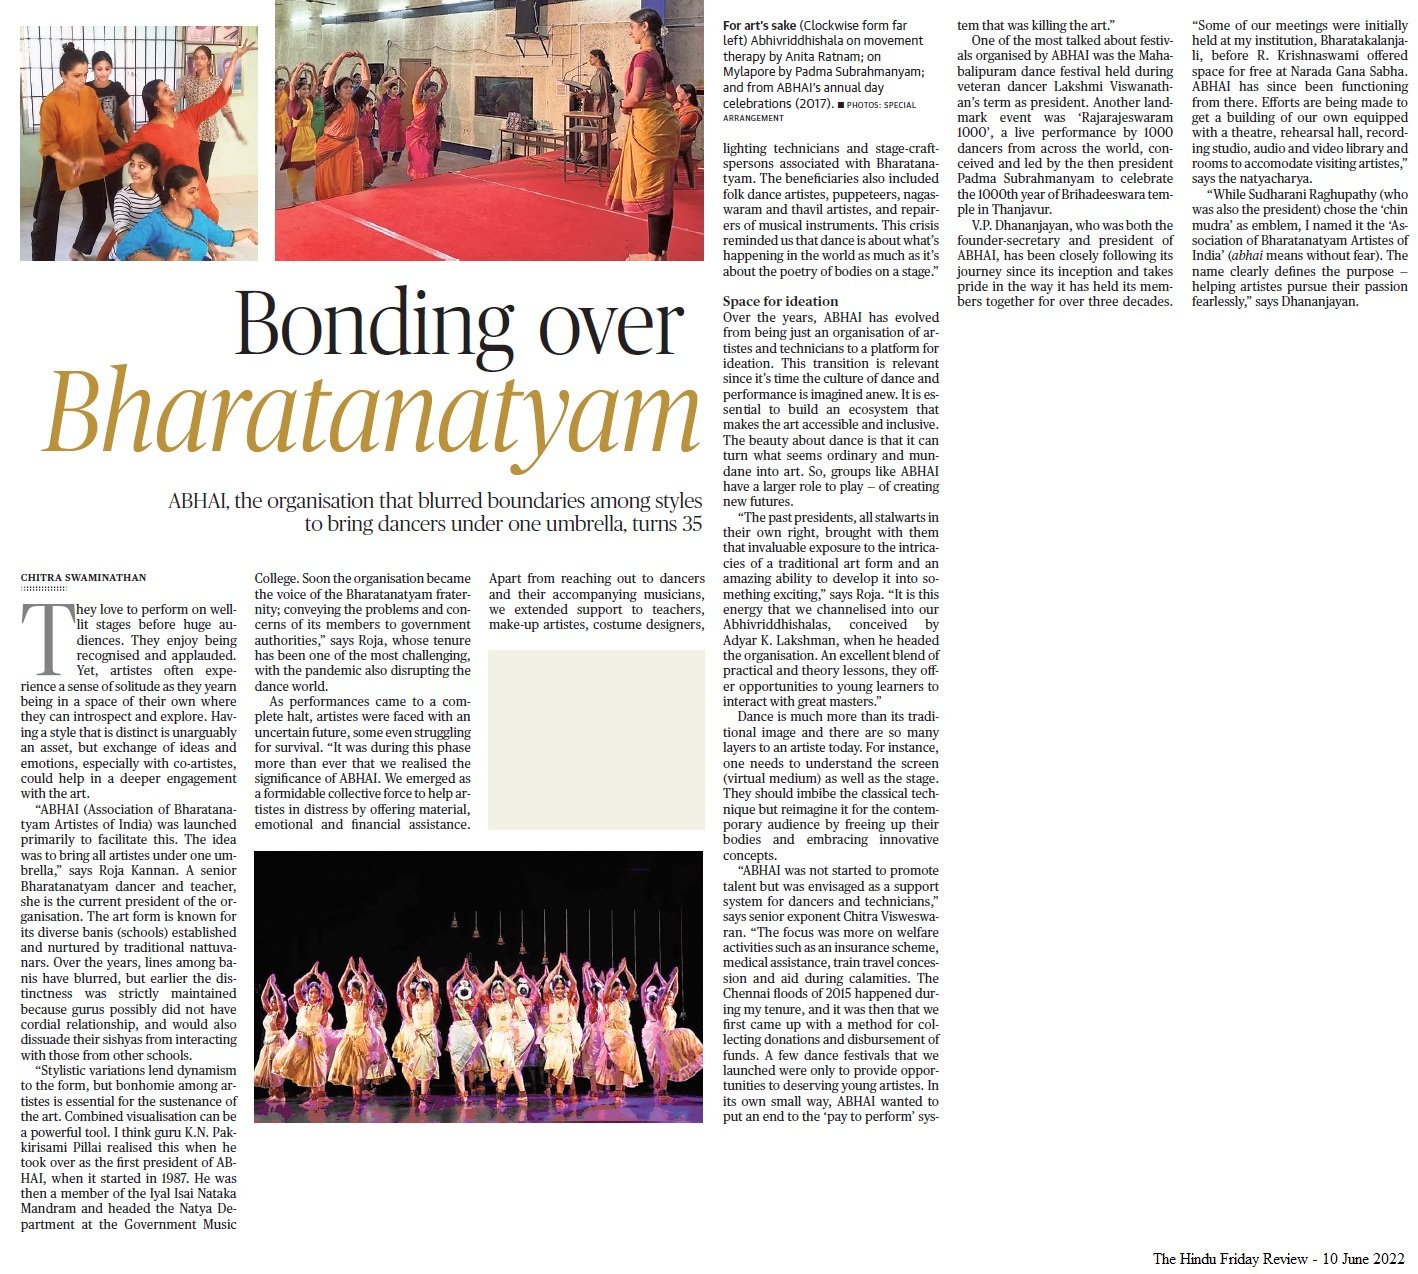 Bonding over Bharatanatyam - Chitra Swaminathan